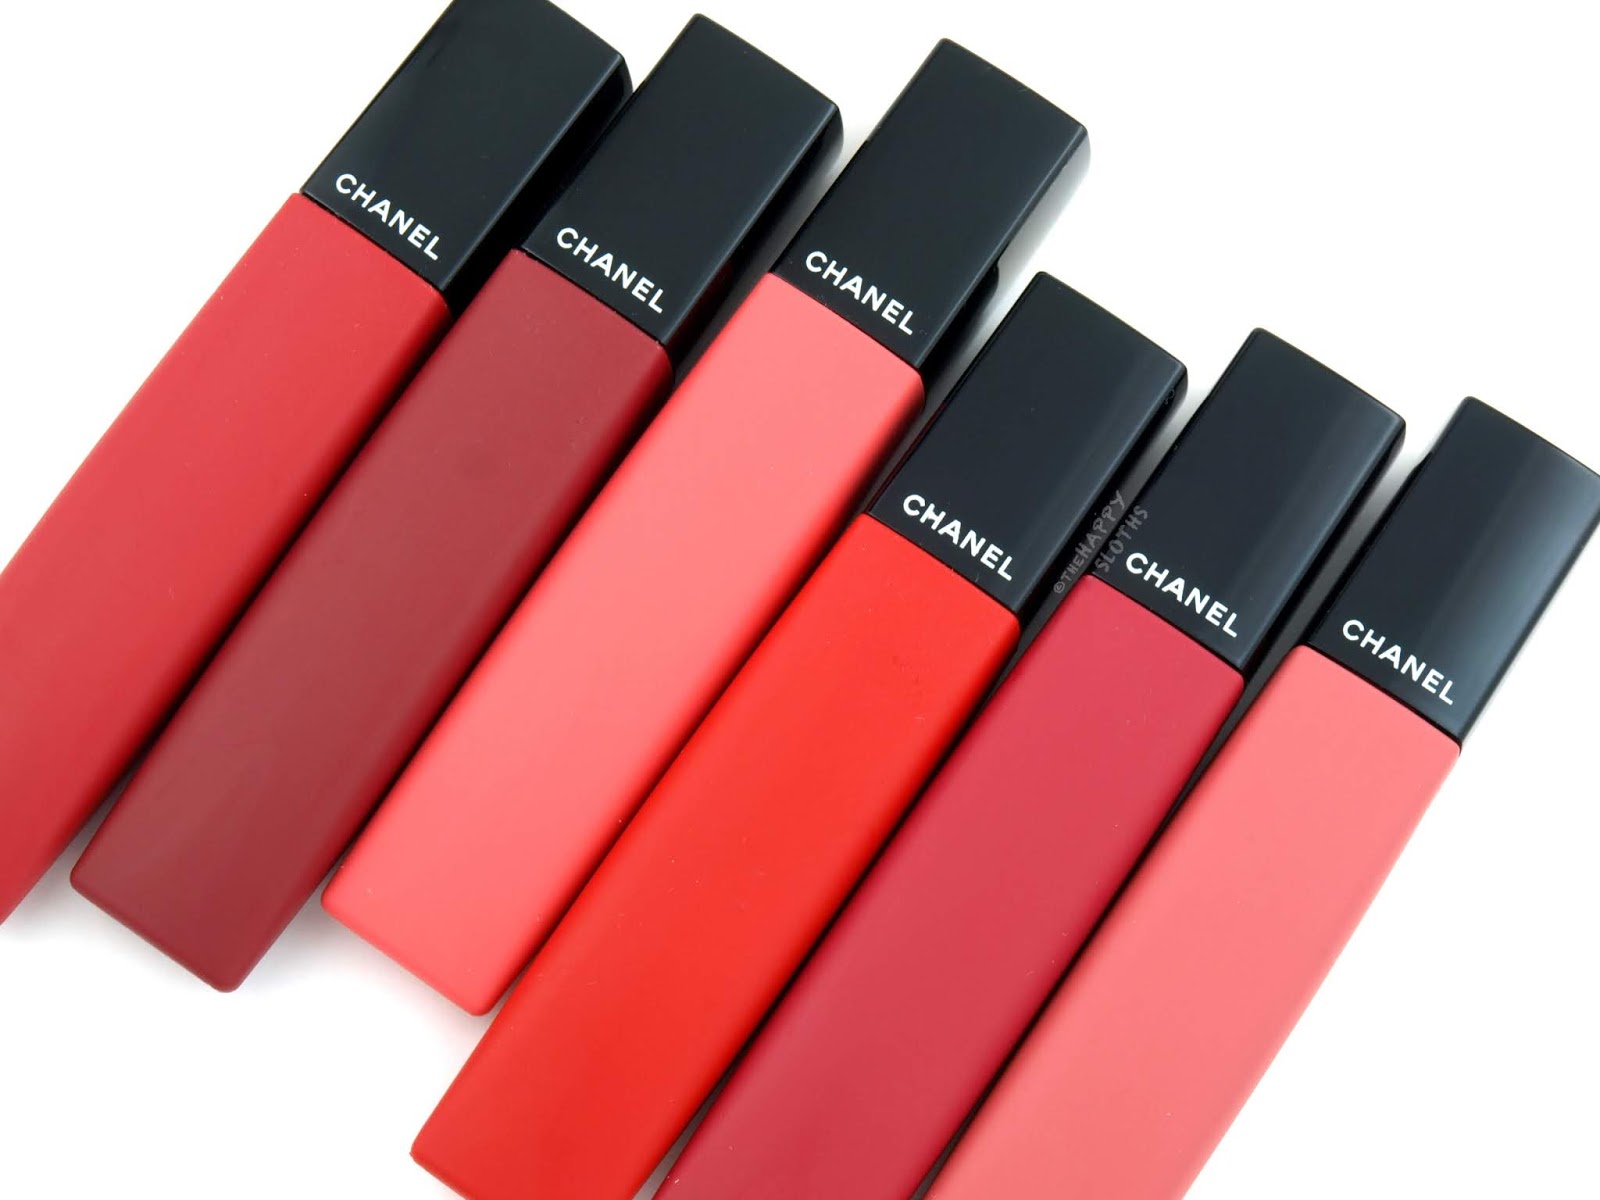 Chanel | Rouge Allure Liquid Powder: Review